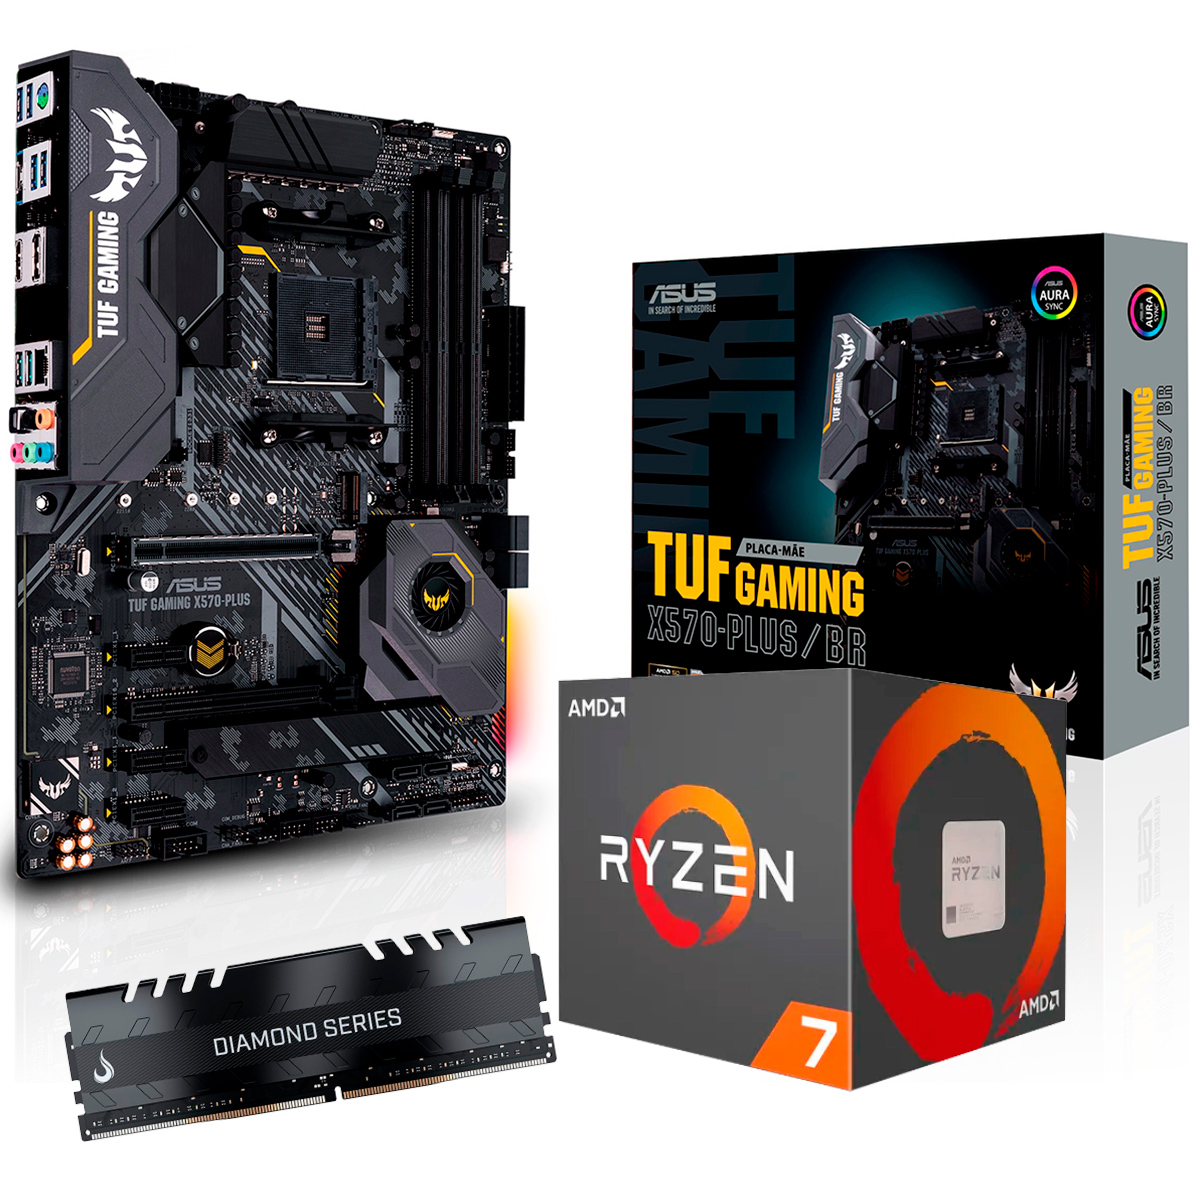 Kit Upgrade AMD Ryzen™ 7 3800X + Asus TUF GAMING X570 PLUS/BR + Memória 8GB DDR4